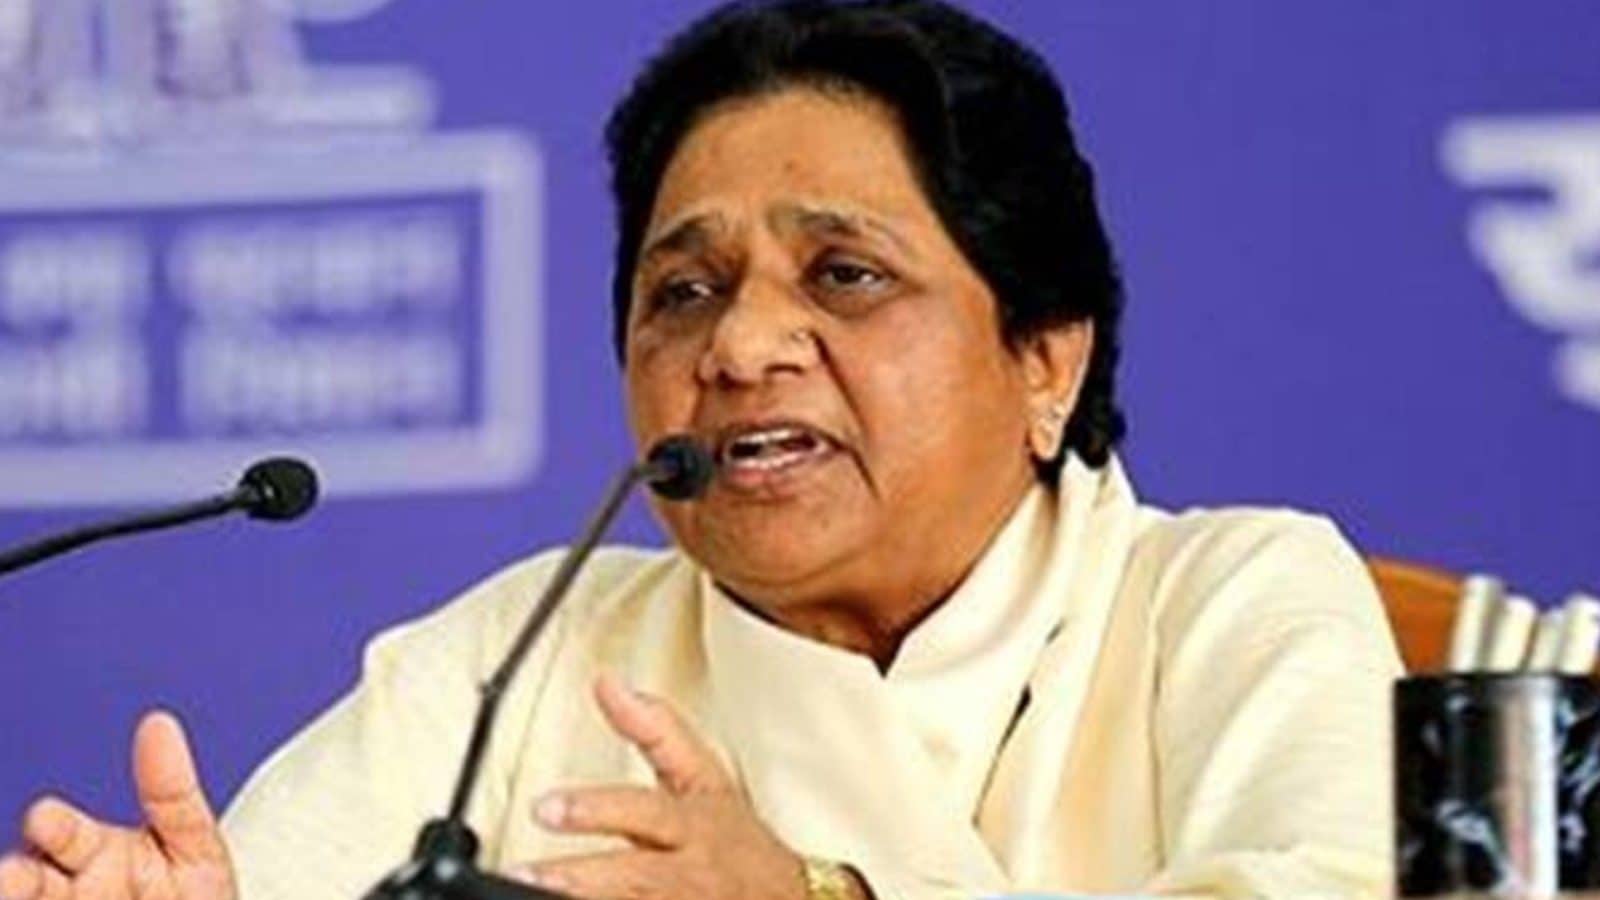 ‘Uttar Pradesh Govt Should Reform Its Police System’: Mayawati on Sanitation Worker’s Custodial Death